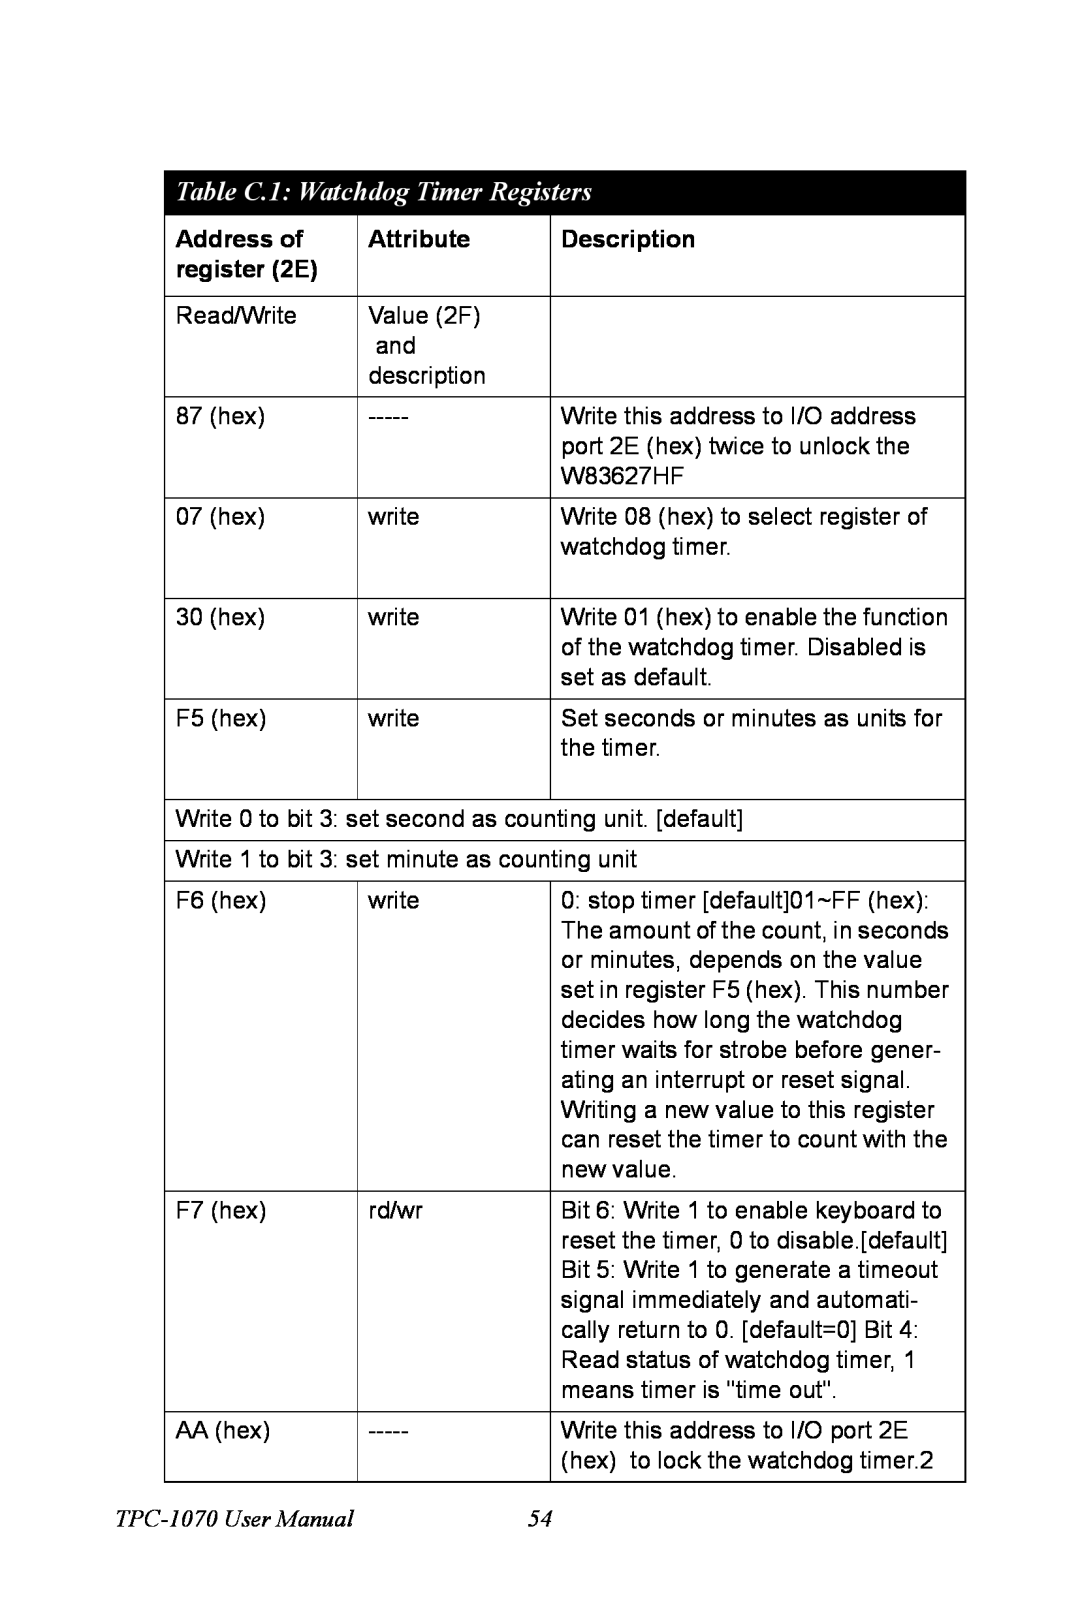 Intel Table C.1 Watchdog Timer Registers, Address of, Attribute, Description, register 2E, TPC-1070 User Manual 